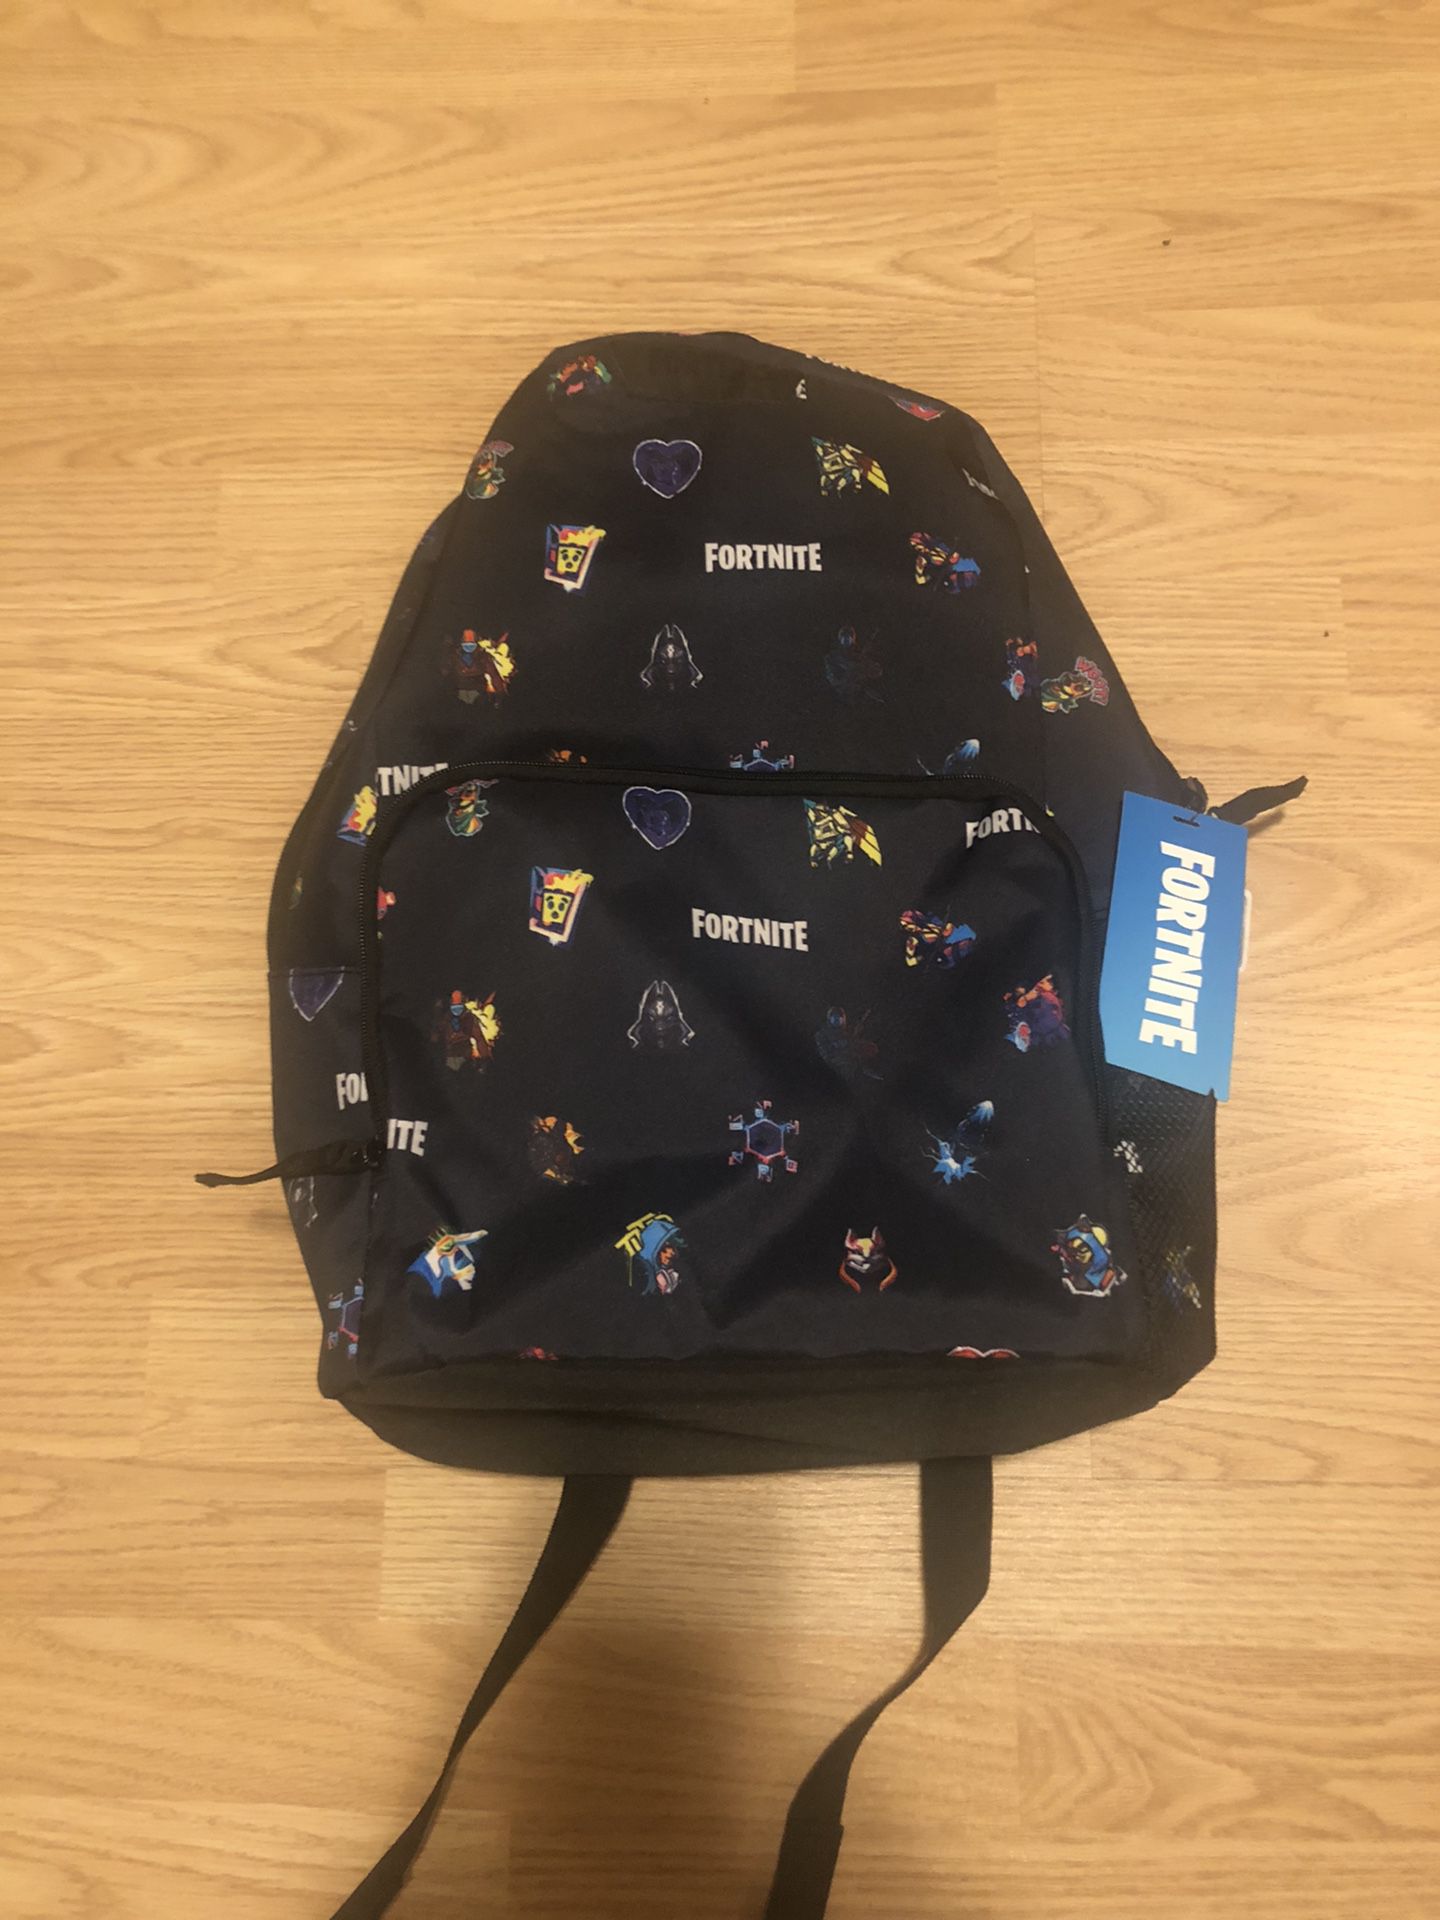 New Fortnite Black M/L Backpack